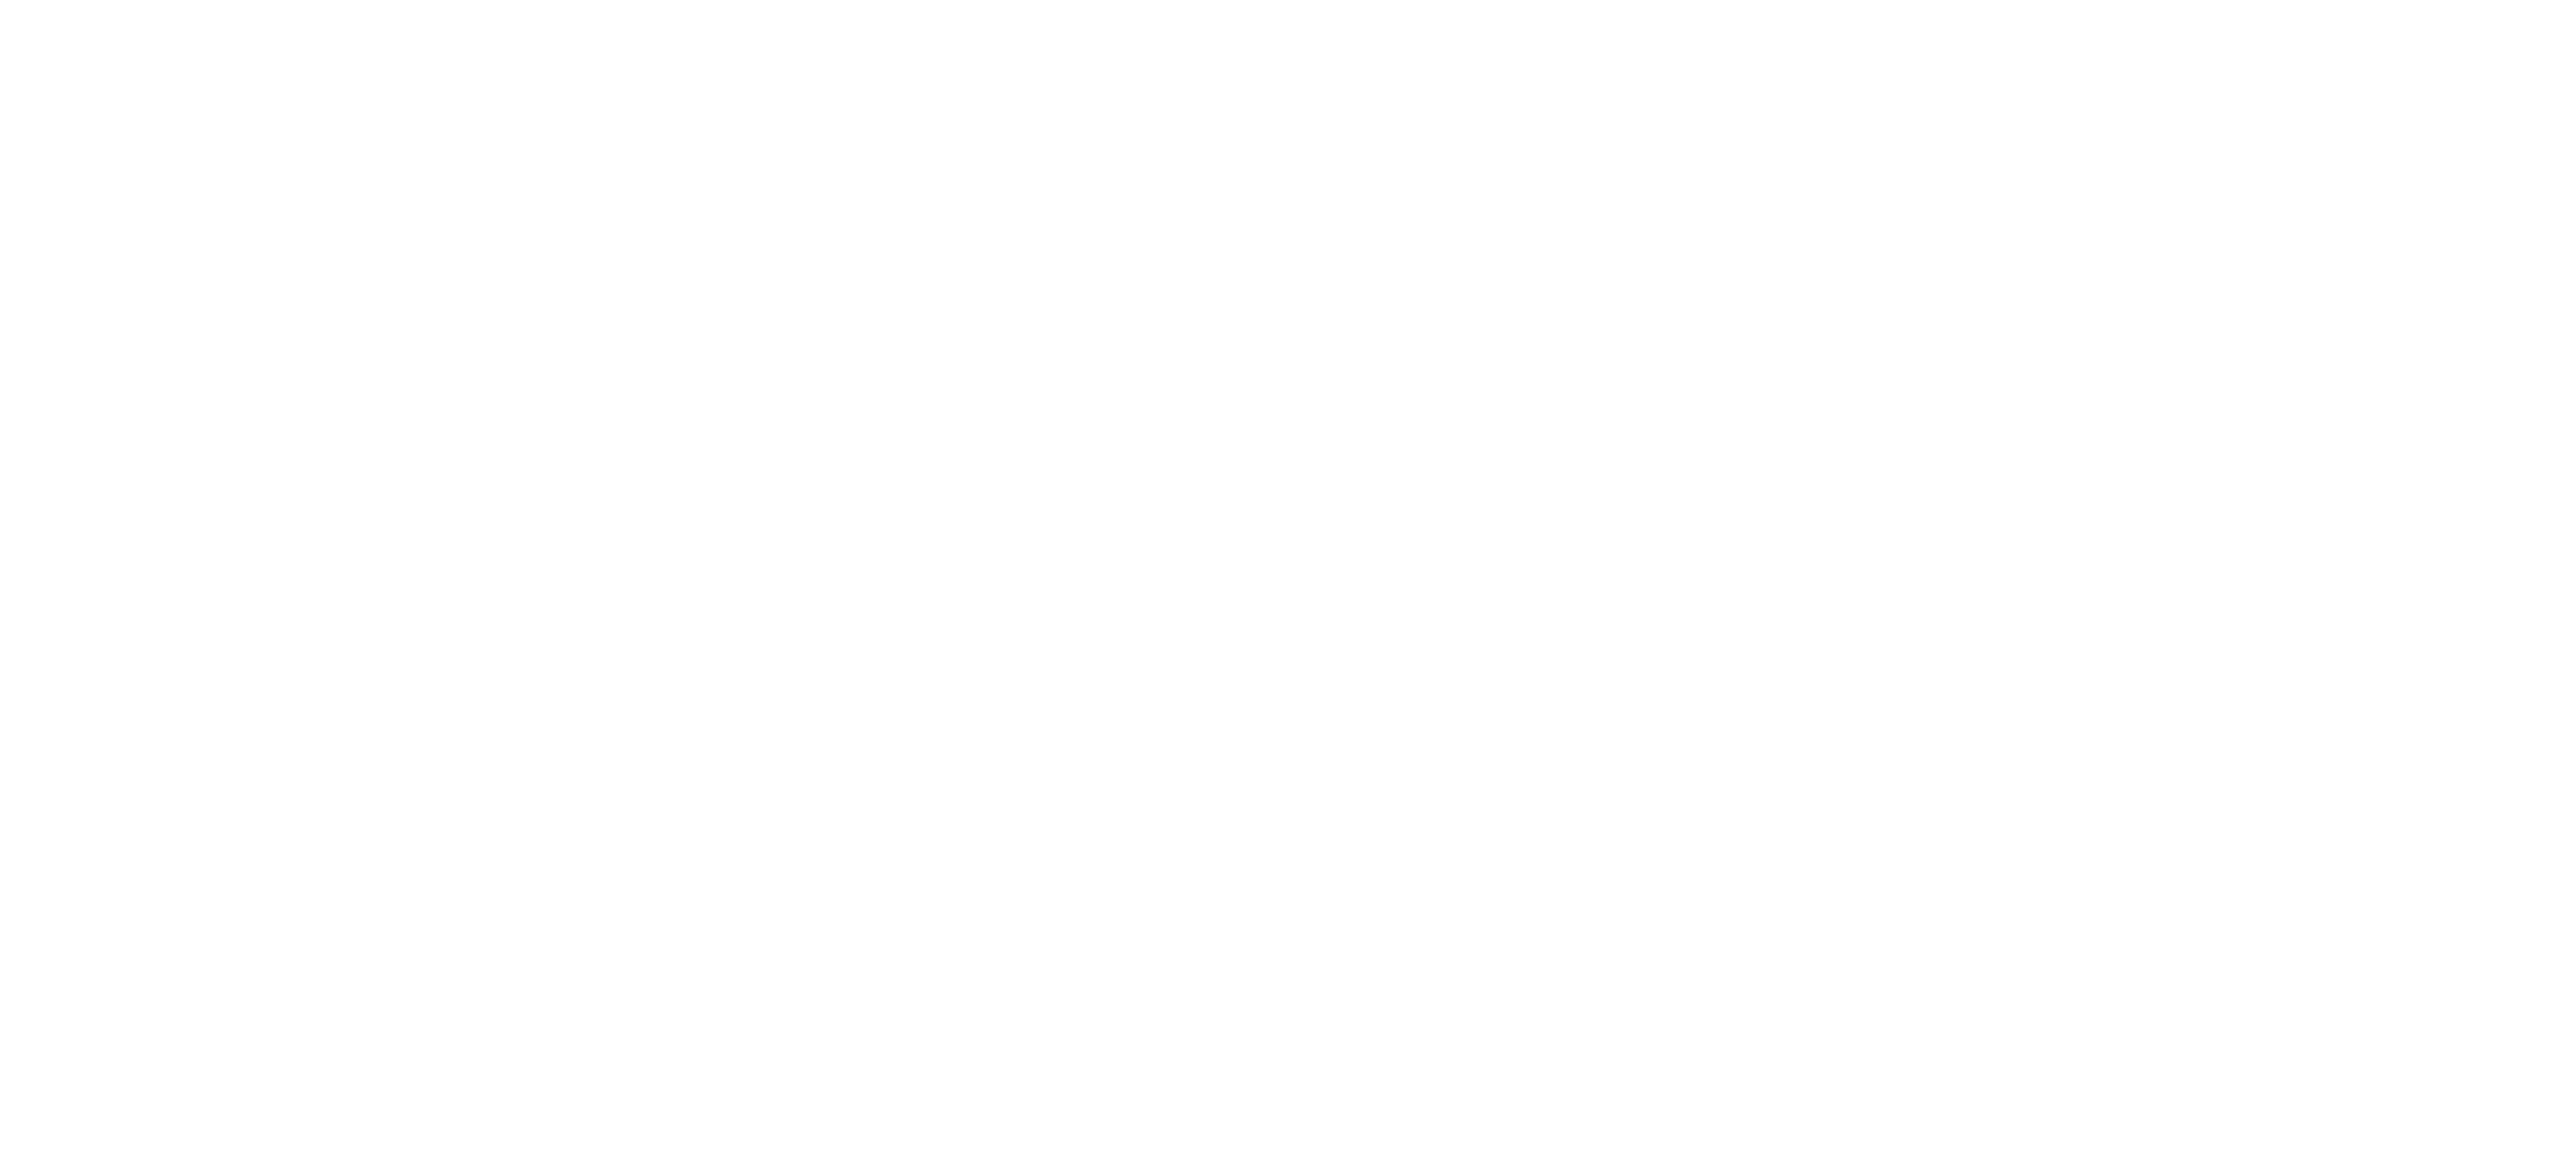 226Lab - Agence créative Suisse